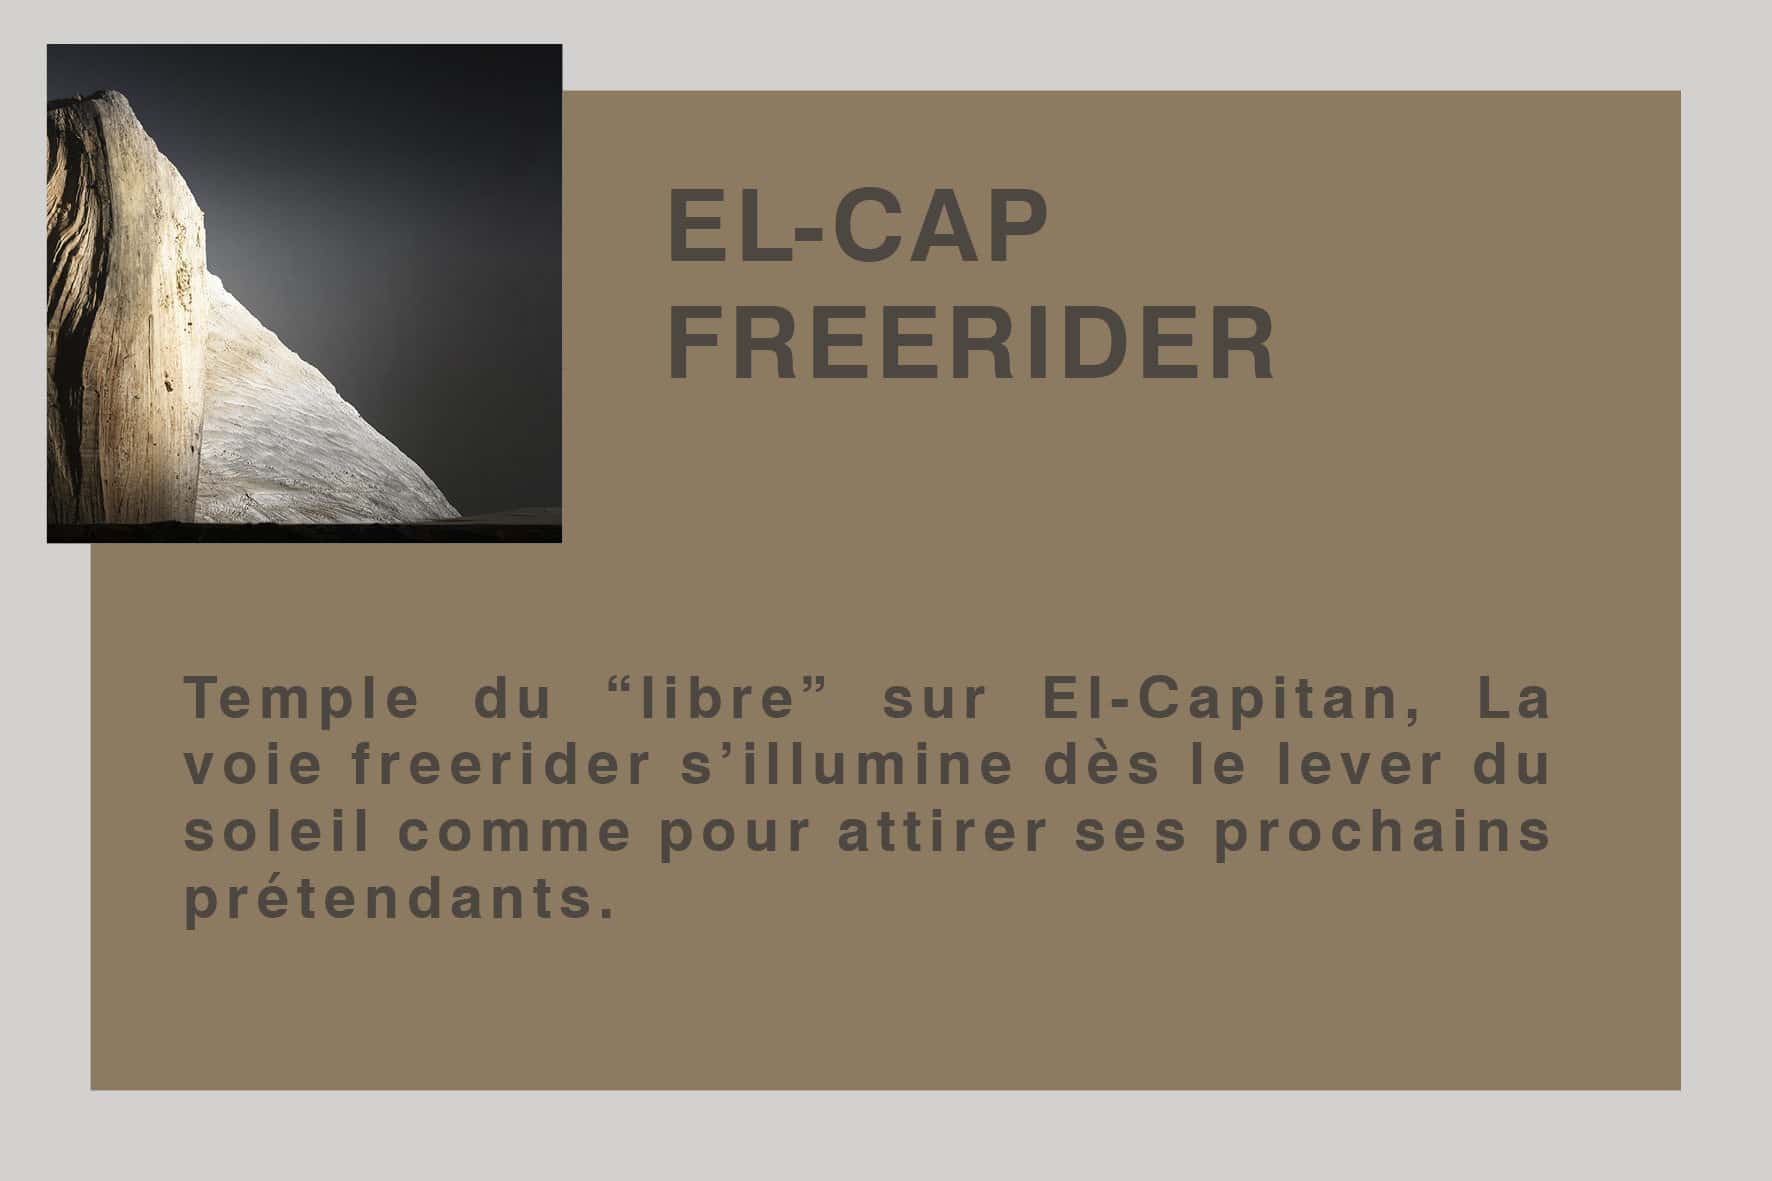 El-Cap freerider par Philippe Jaccard